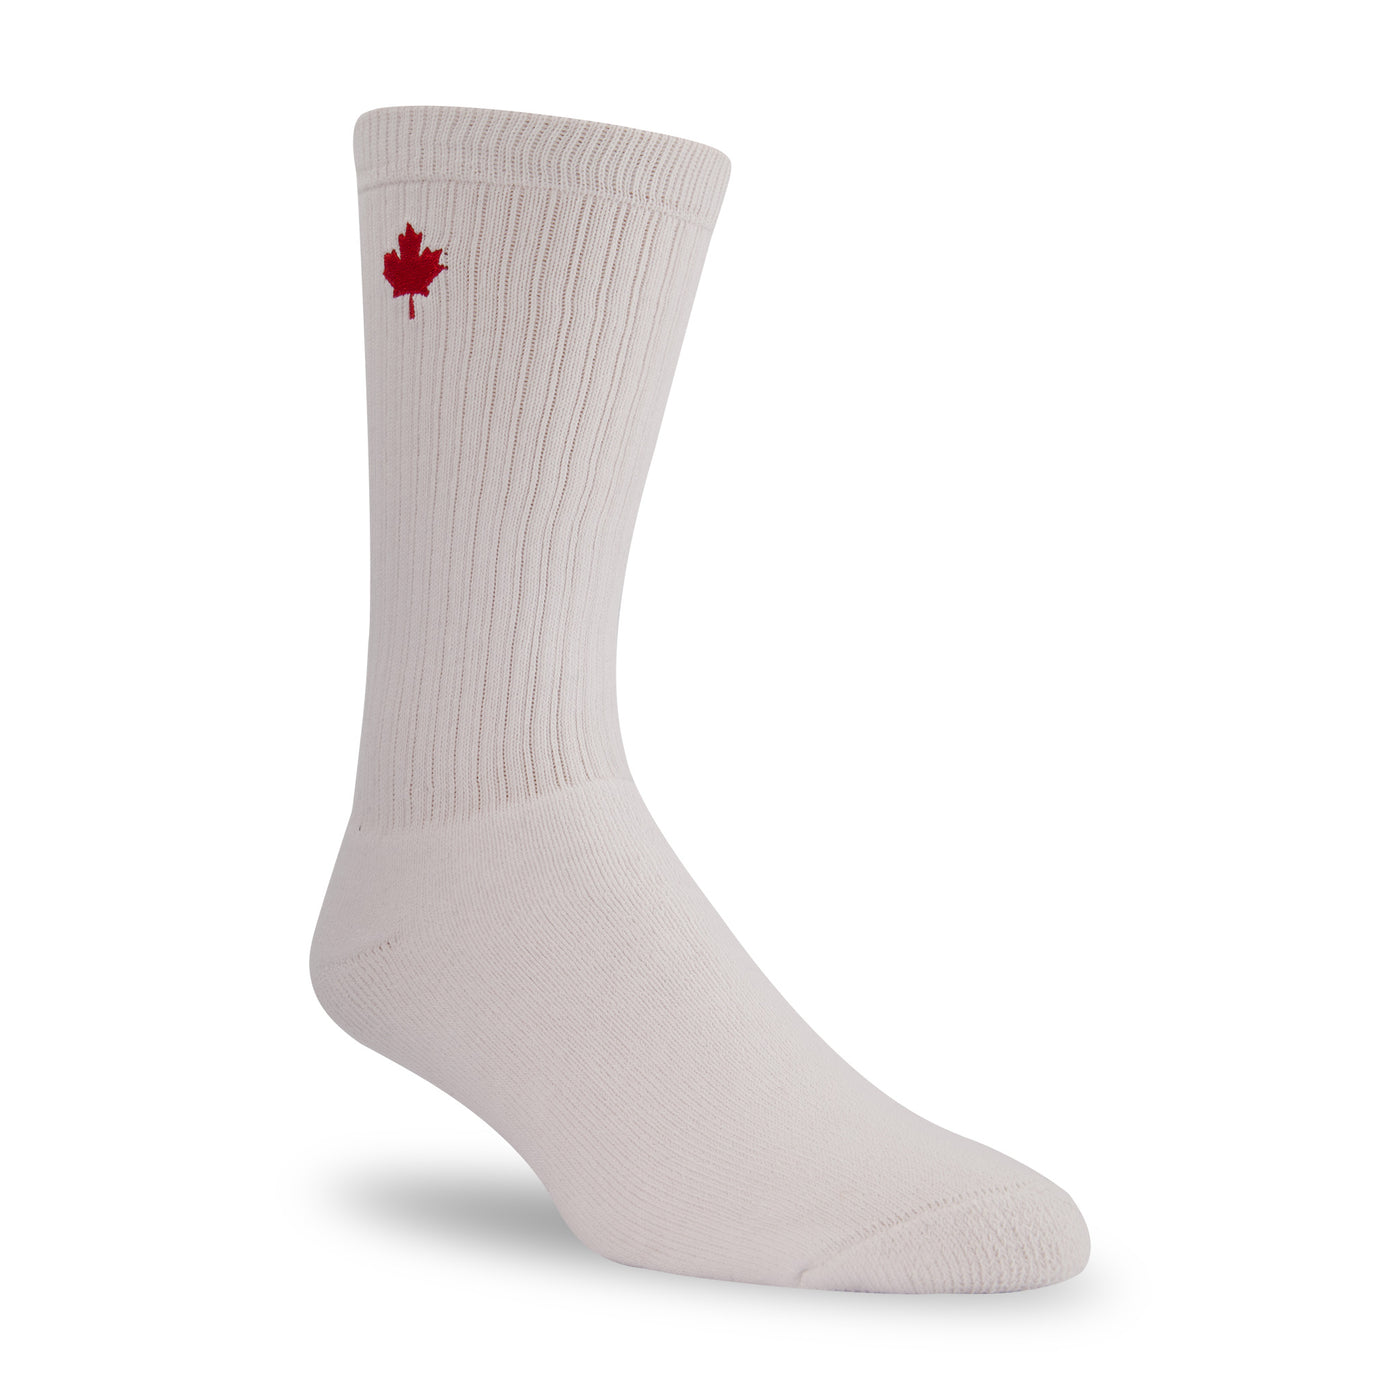 J.B. Field's "Canadian Maple Leaf" Organic Cotton Crew Sock